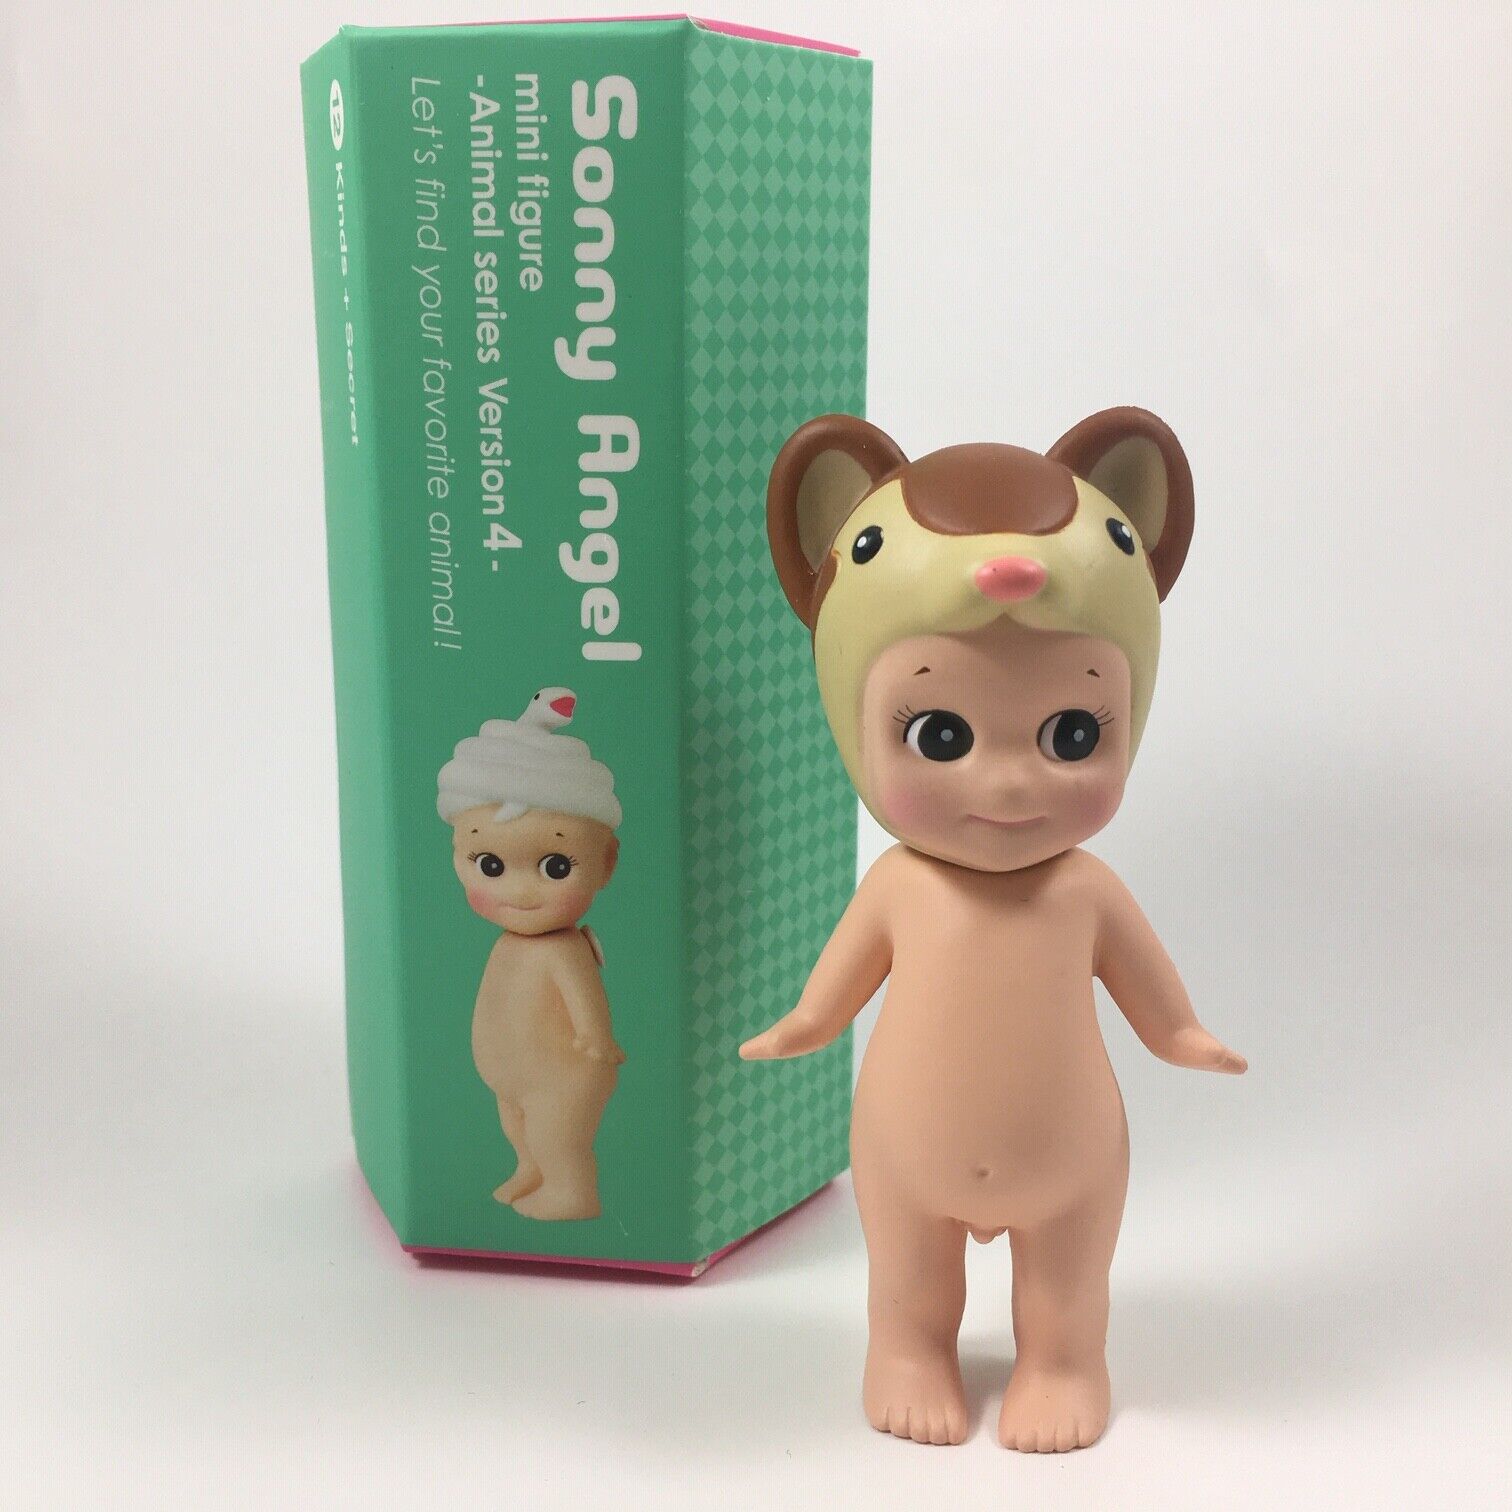 Sonny Angel MONGOOSE Animal Series 4 Mini Figure Baby Doll Dreams Toys Figurine